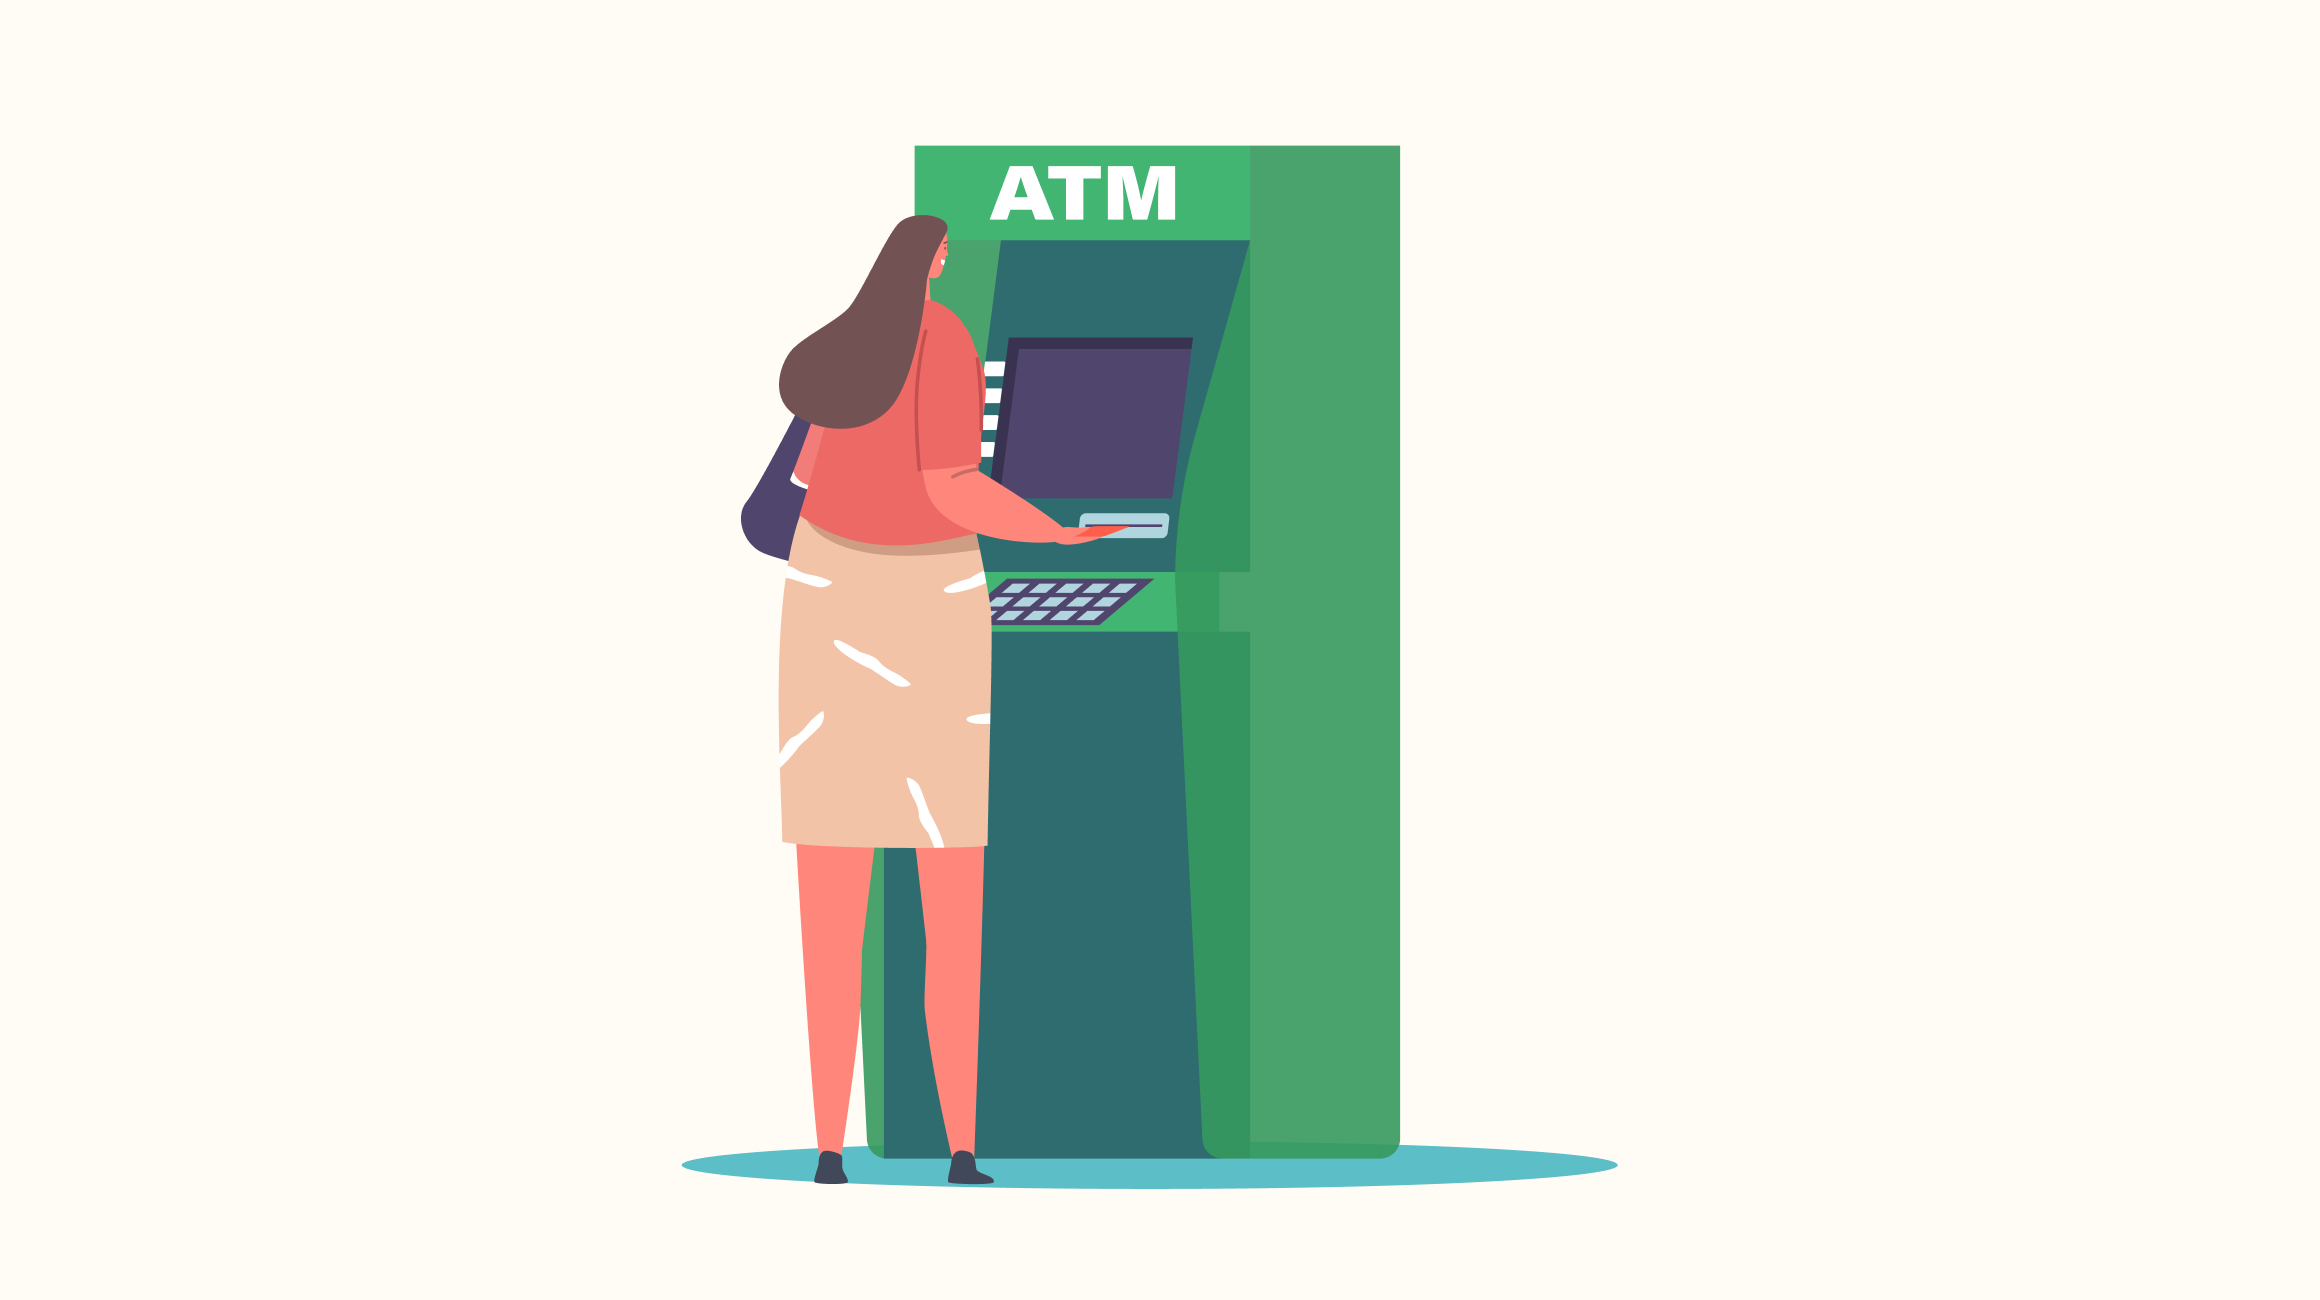 Cardless ATM access illustration